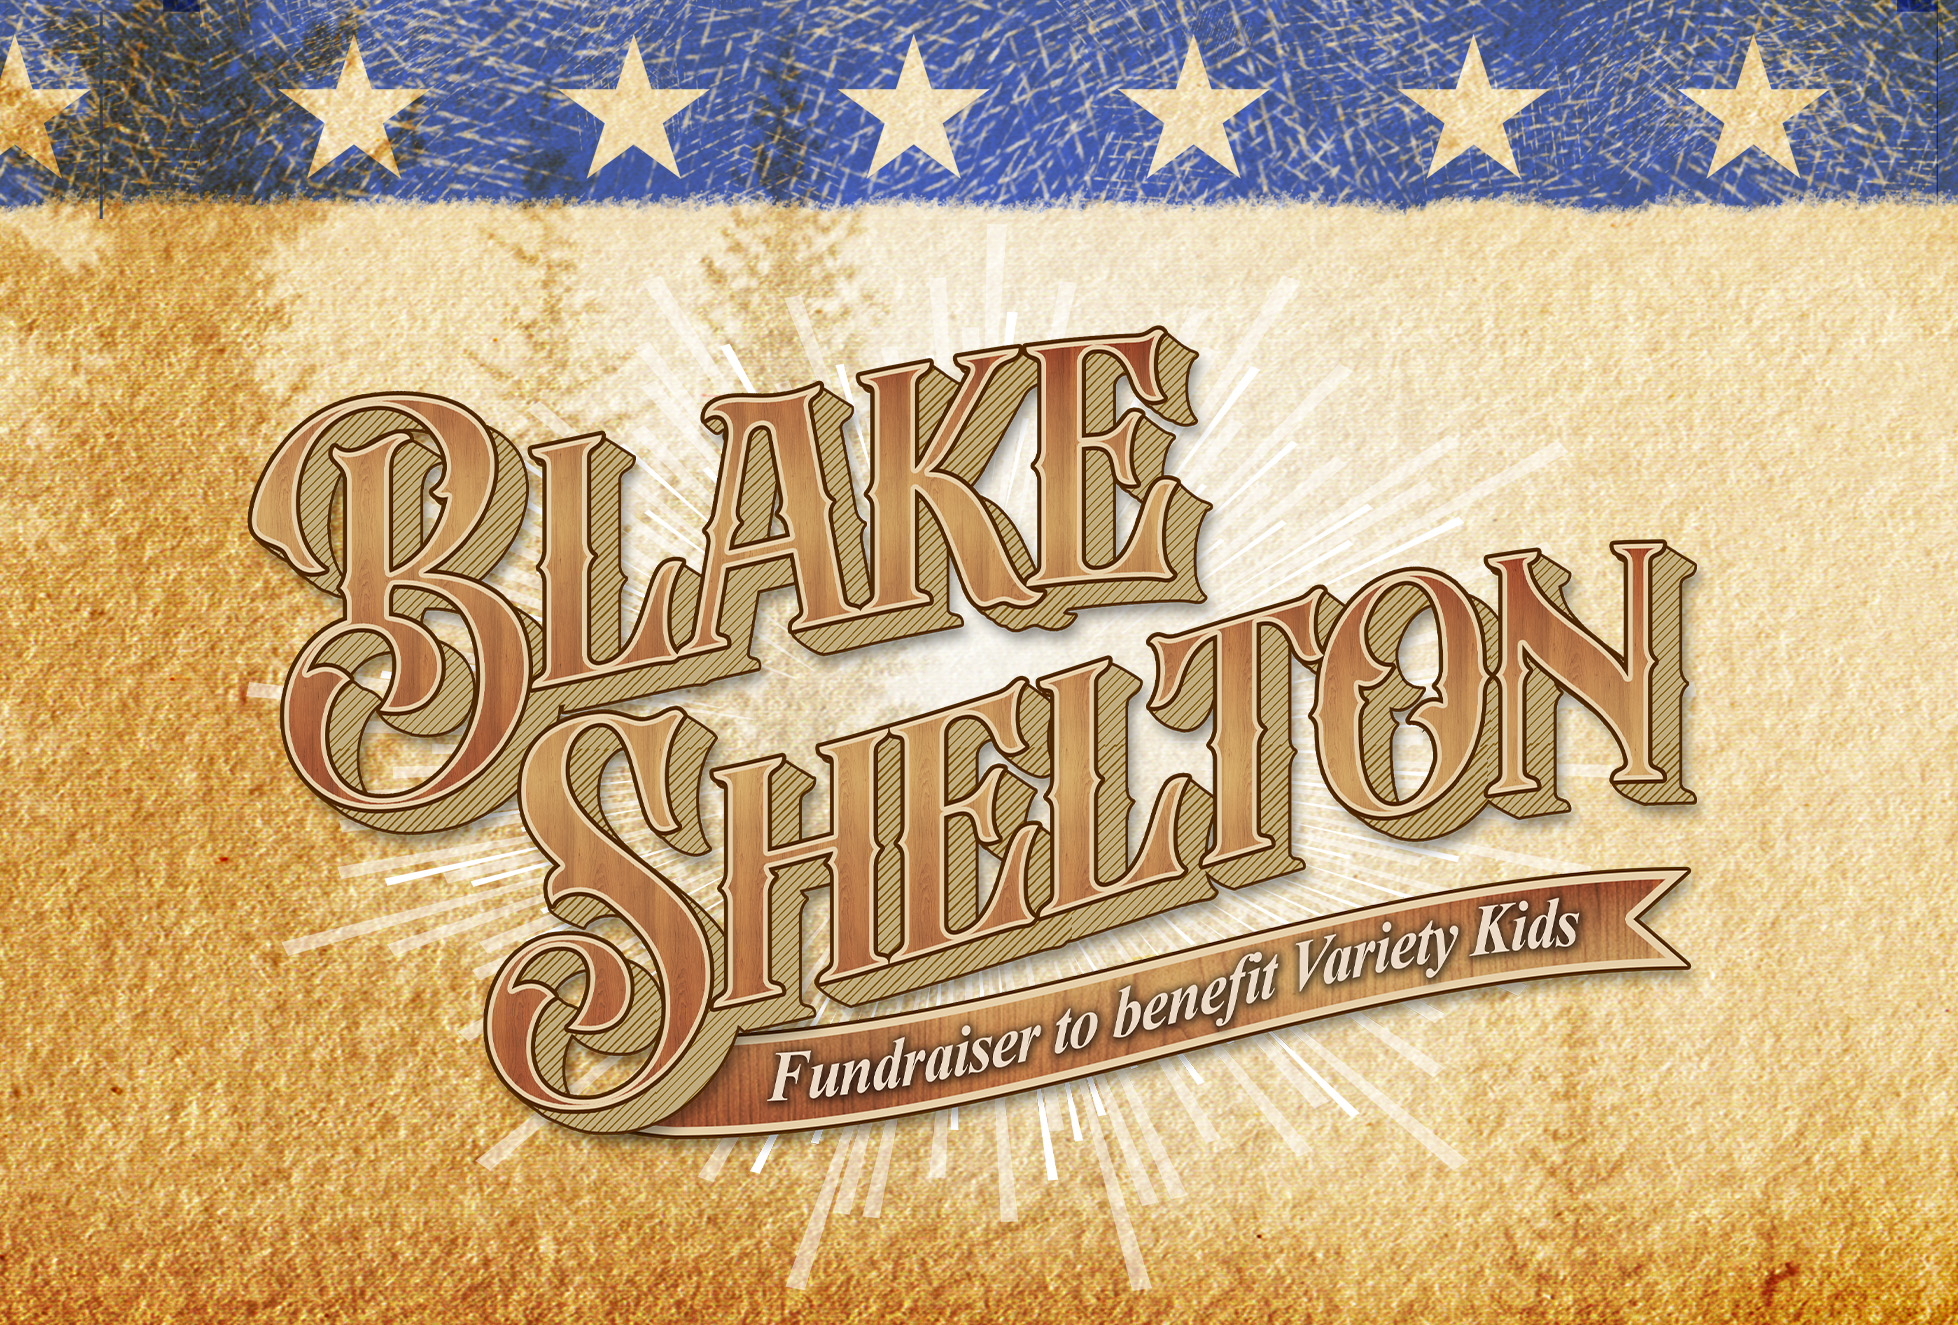 The “Blake Shelton” <BR> Bundle Fundraiser!